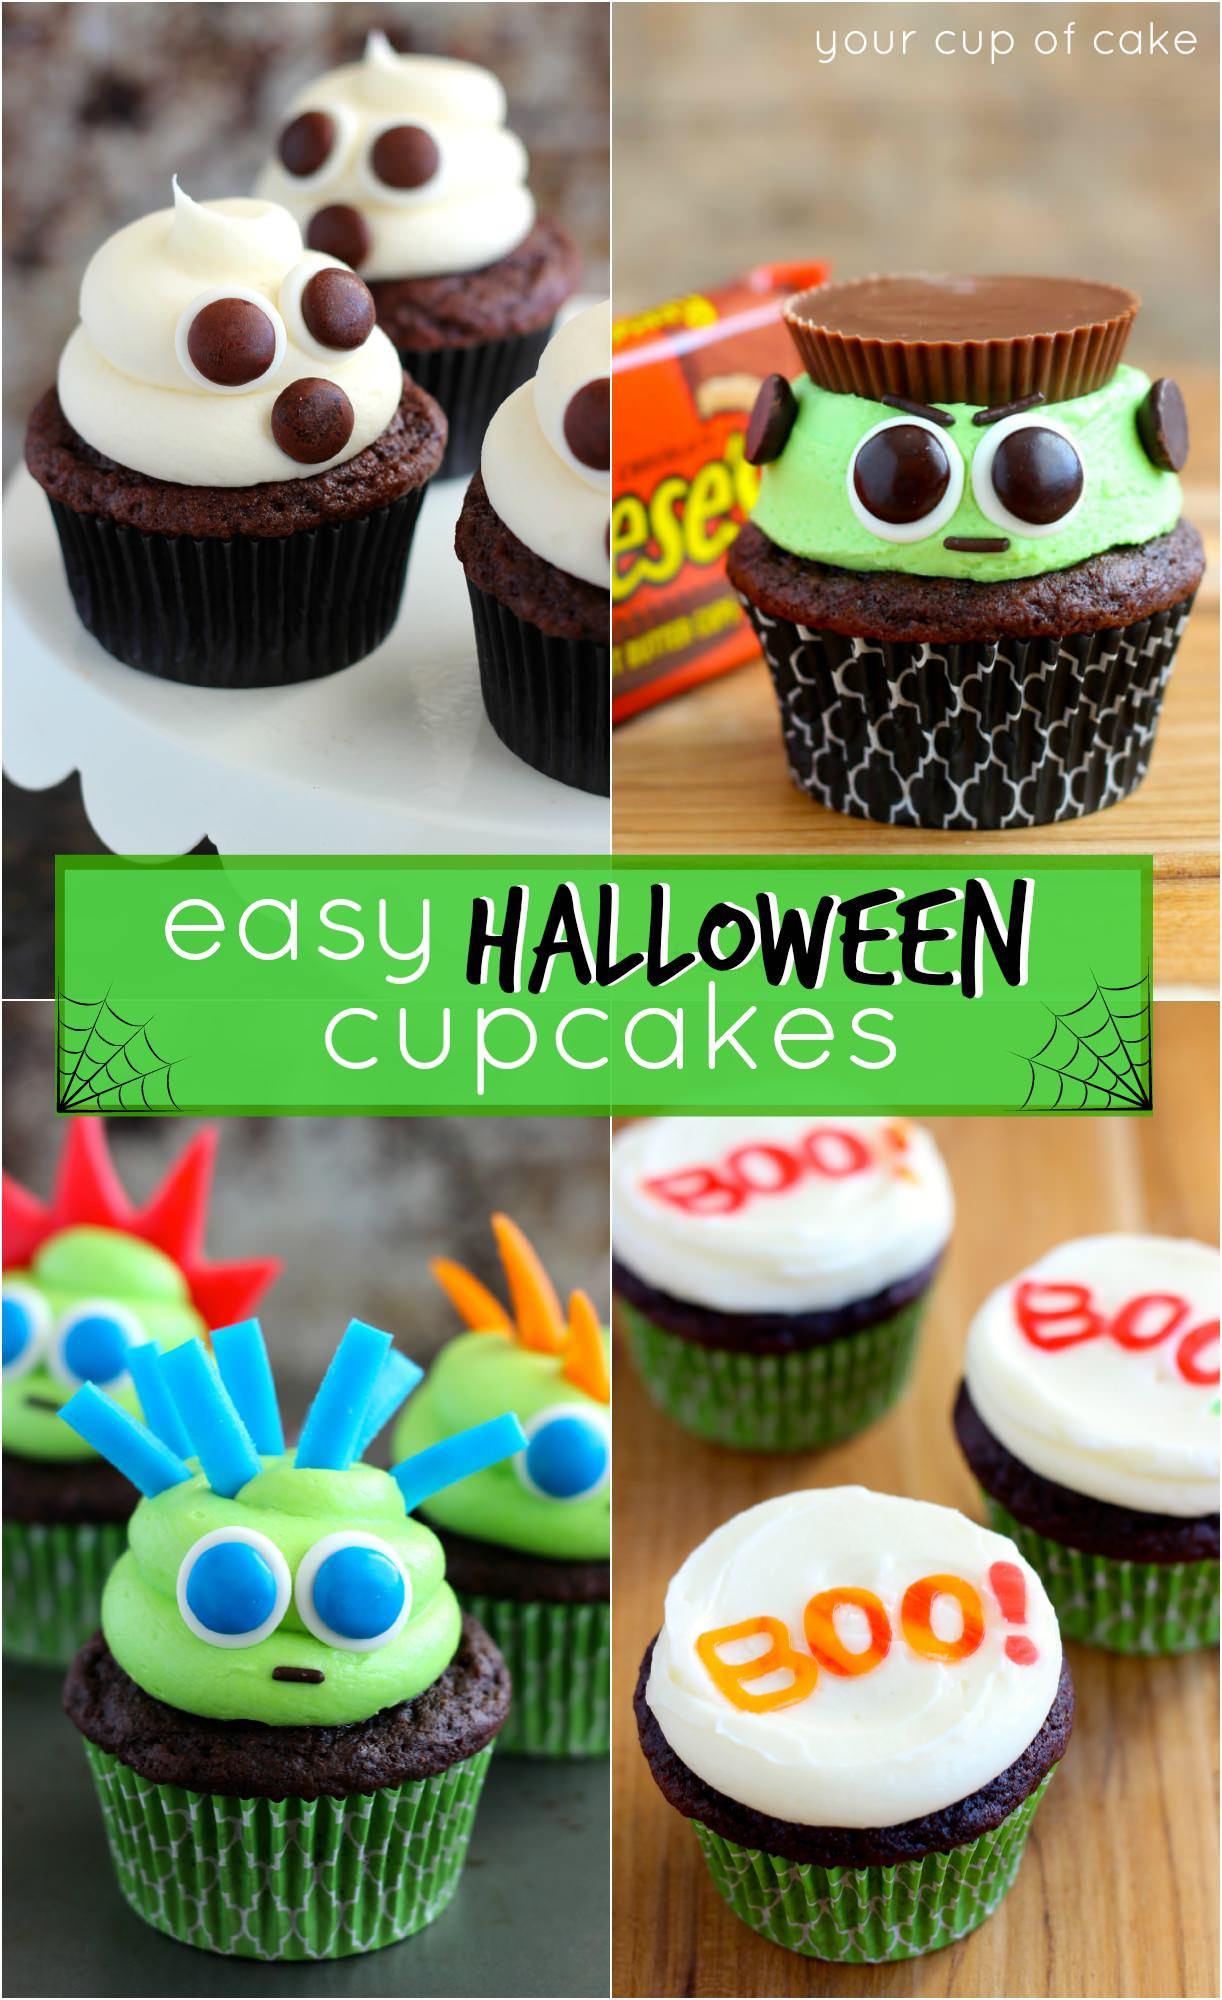 Halloween Cupcake Cakes
 Easy Halloween Cupcake Ideas Your Cup of Cake